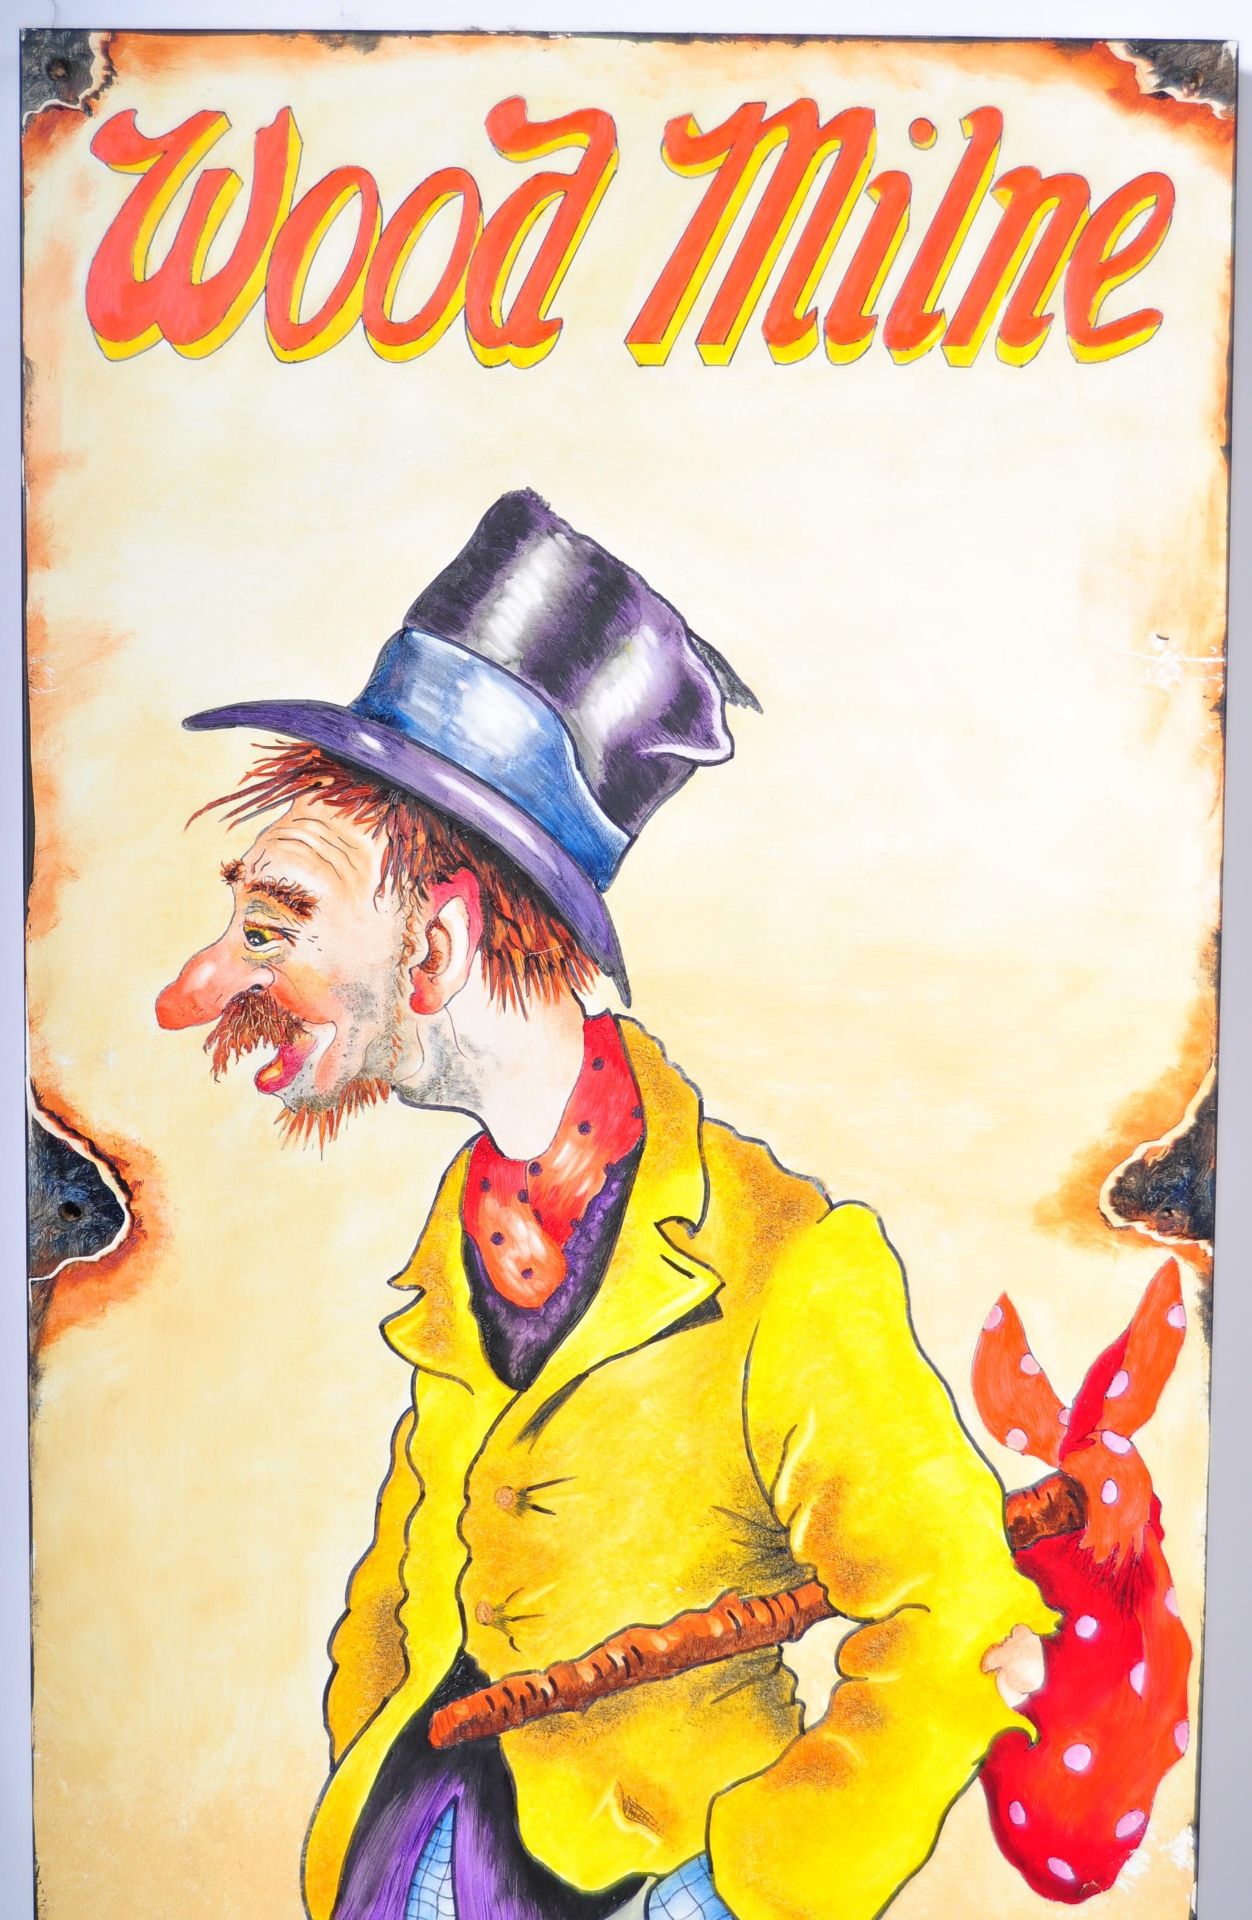 WOOD MILNE SHOE SHINE OIL ON BOARD IMPRESSION OF A ENAMEL ADVERTISING SIGN - Image 2 of 3